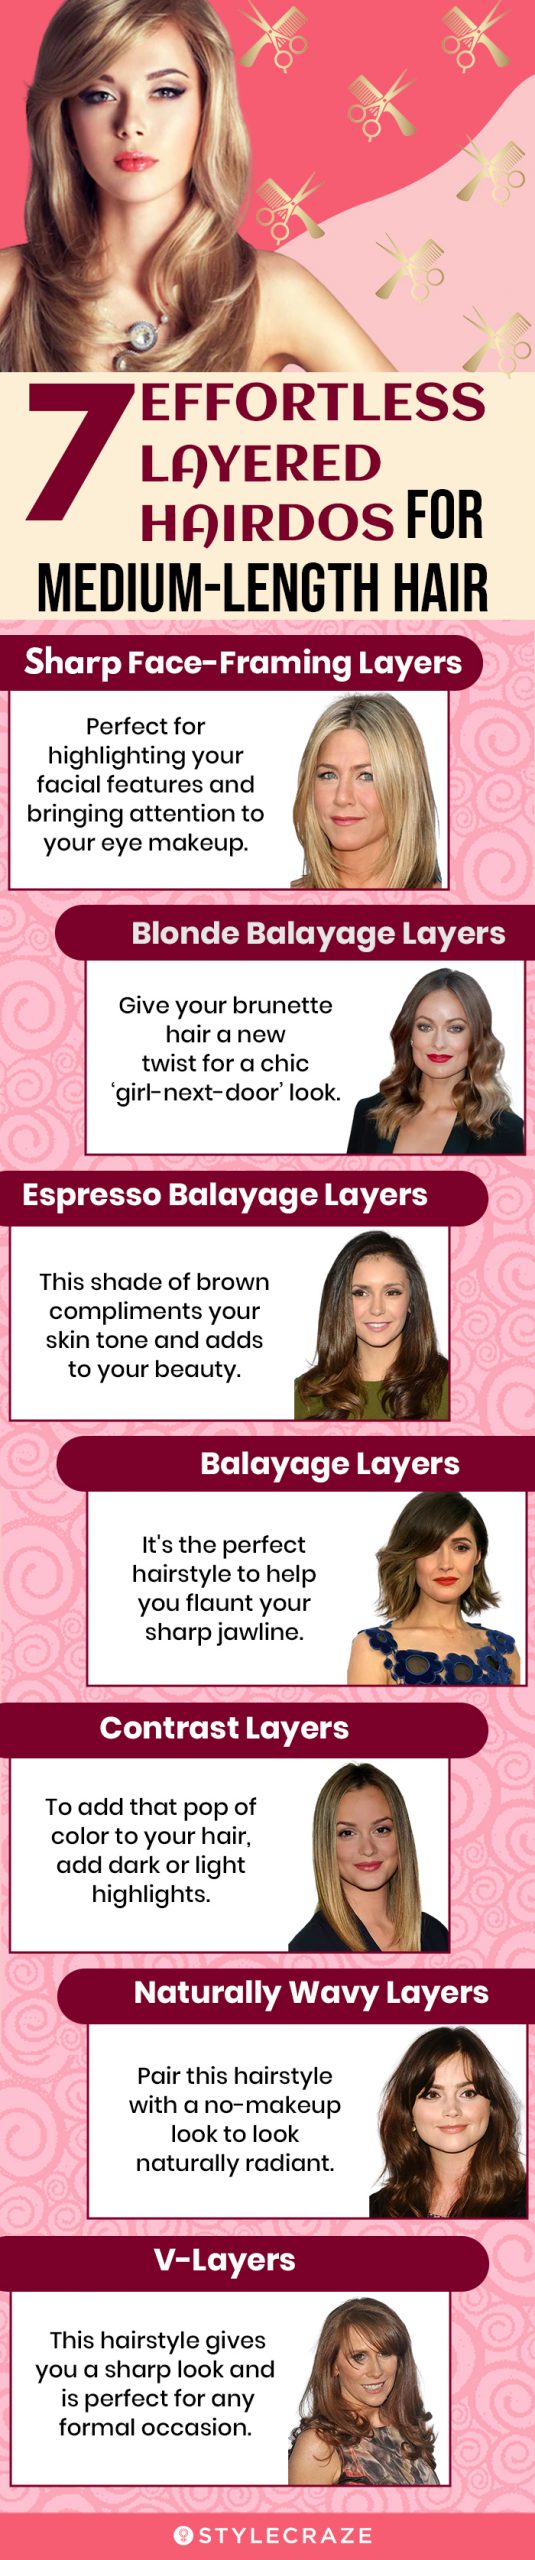 7 effortless hairdos for medium length hair [infographic]